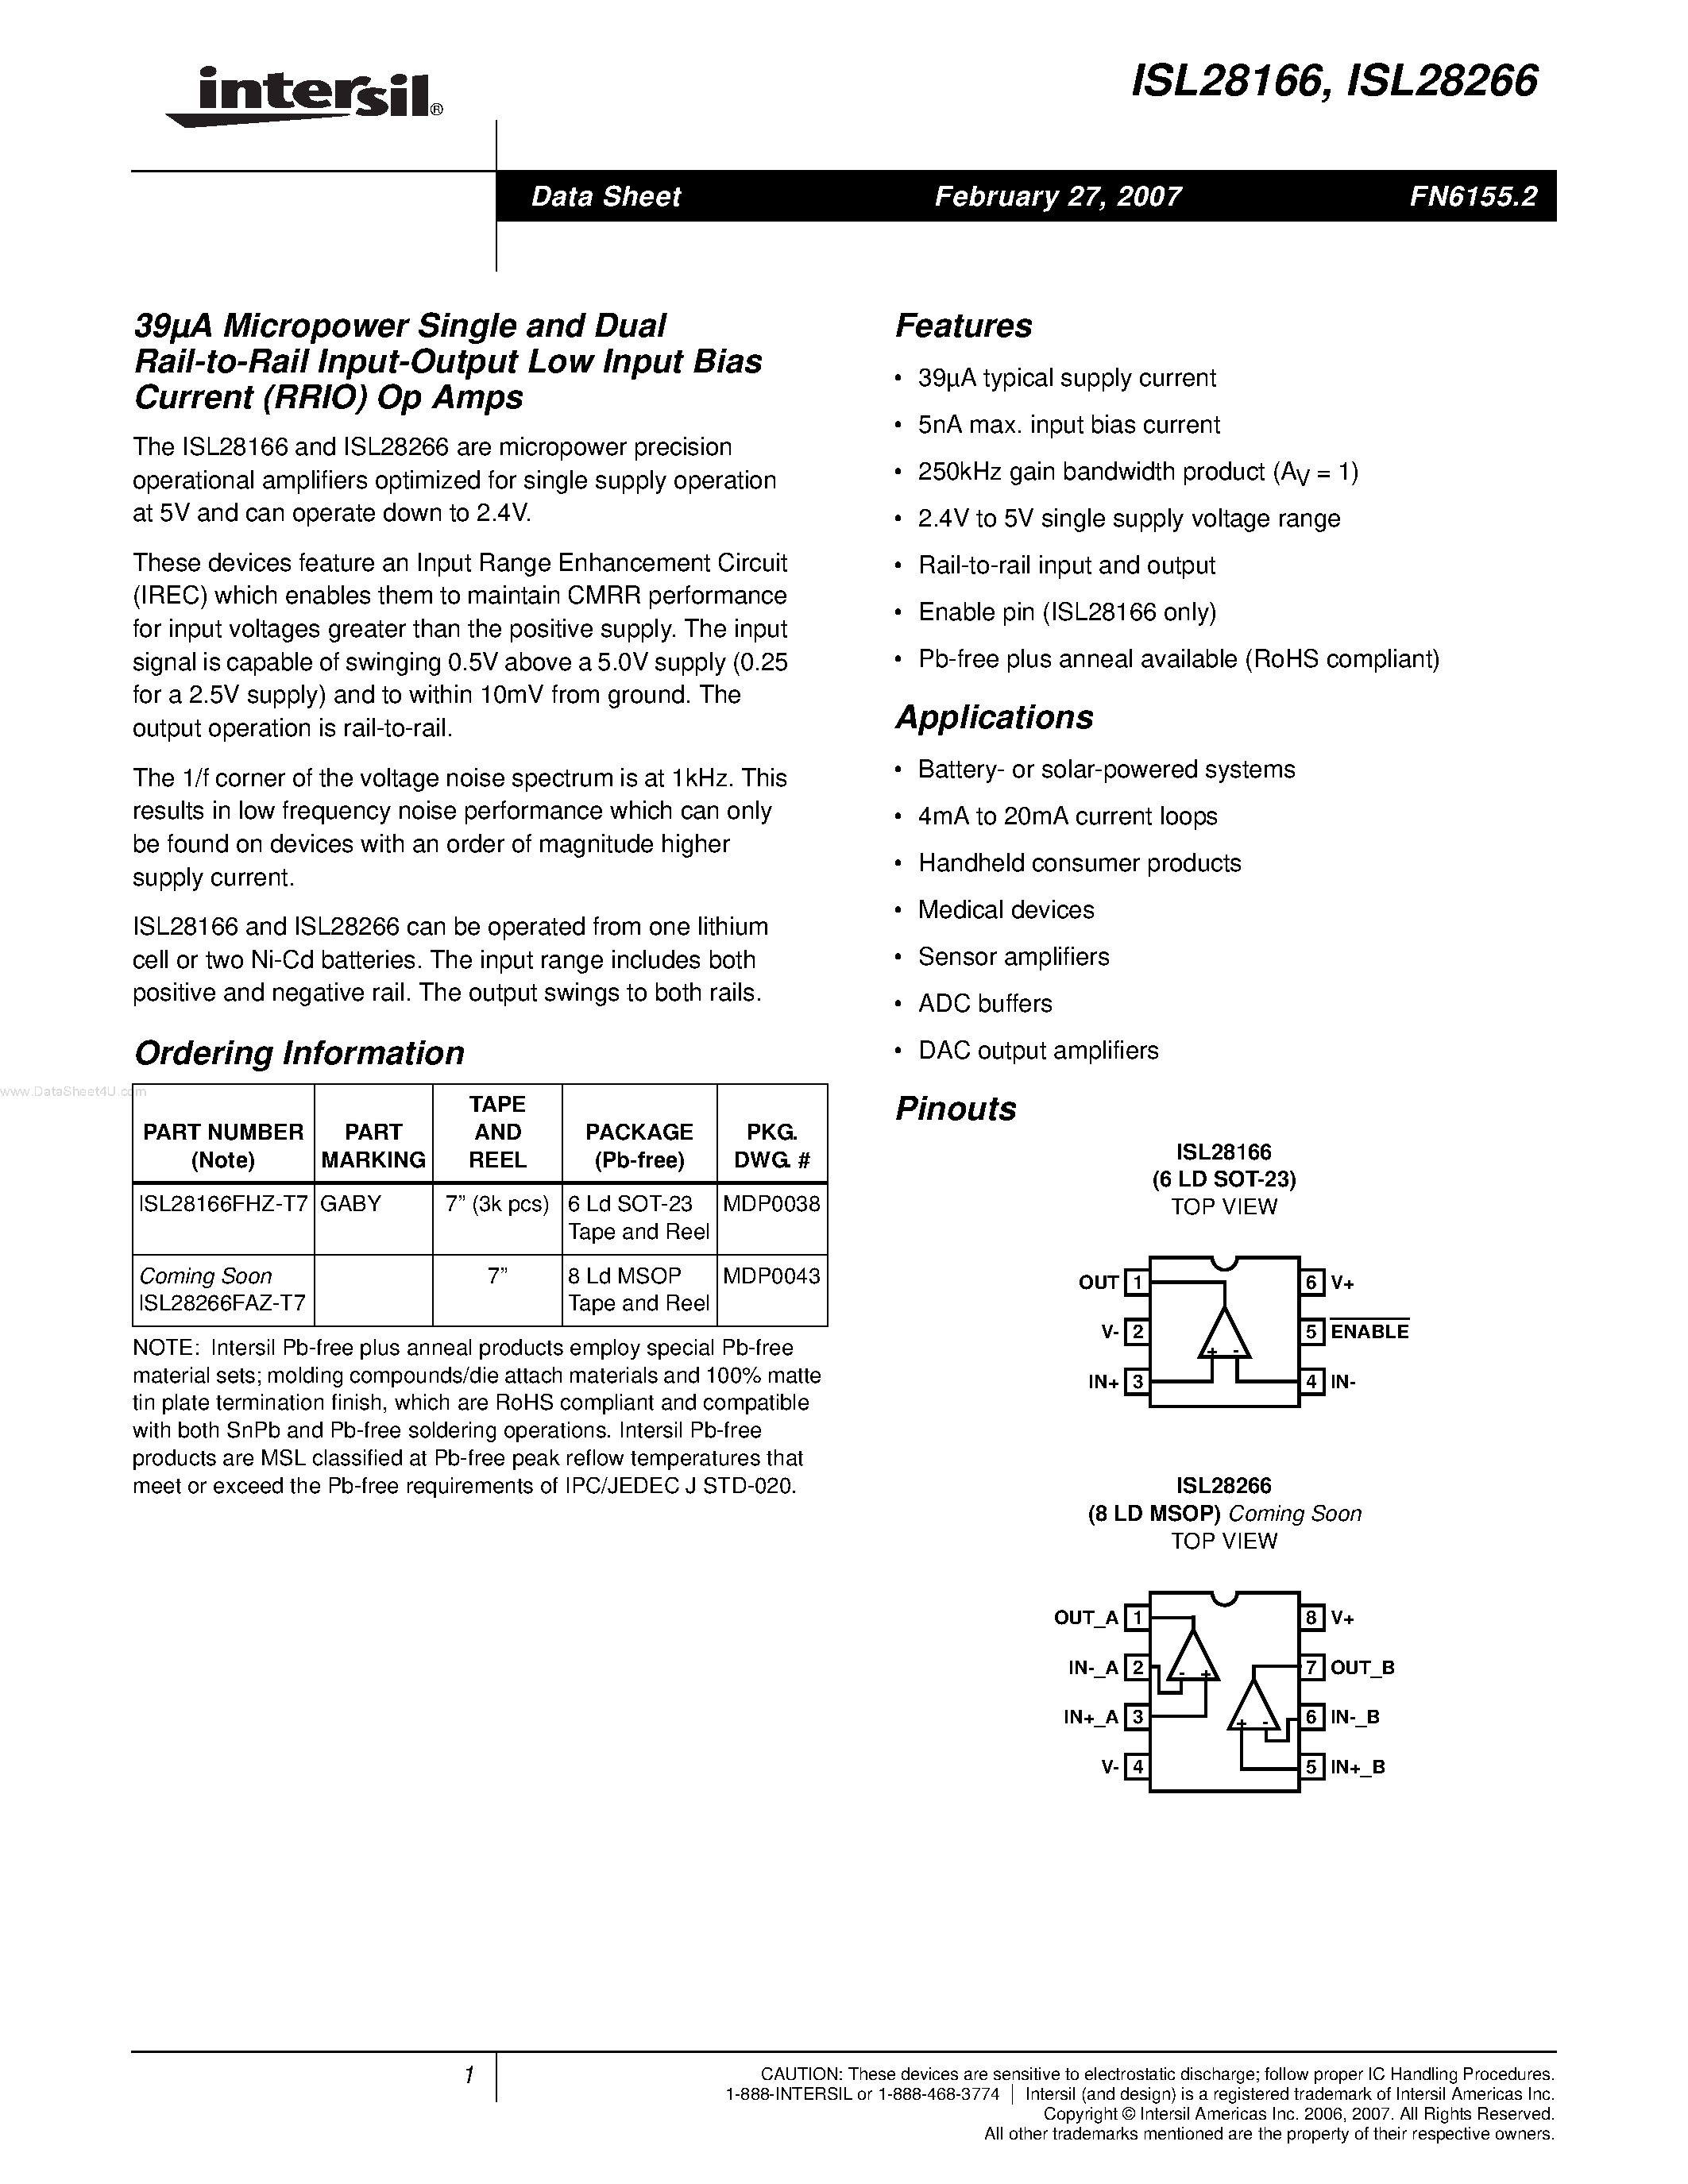 Даташит ISL28266 - (ISL28166 / ISL28266) 39uA Micropower Single and Dual Rail-to-Rail Input-Output Low Input Bias Current (RRIO) Op Amps страница 1